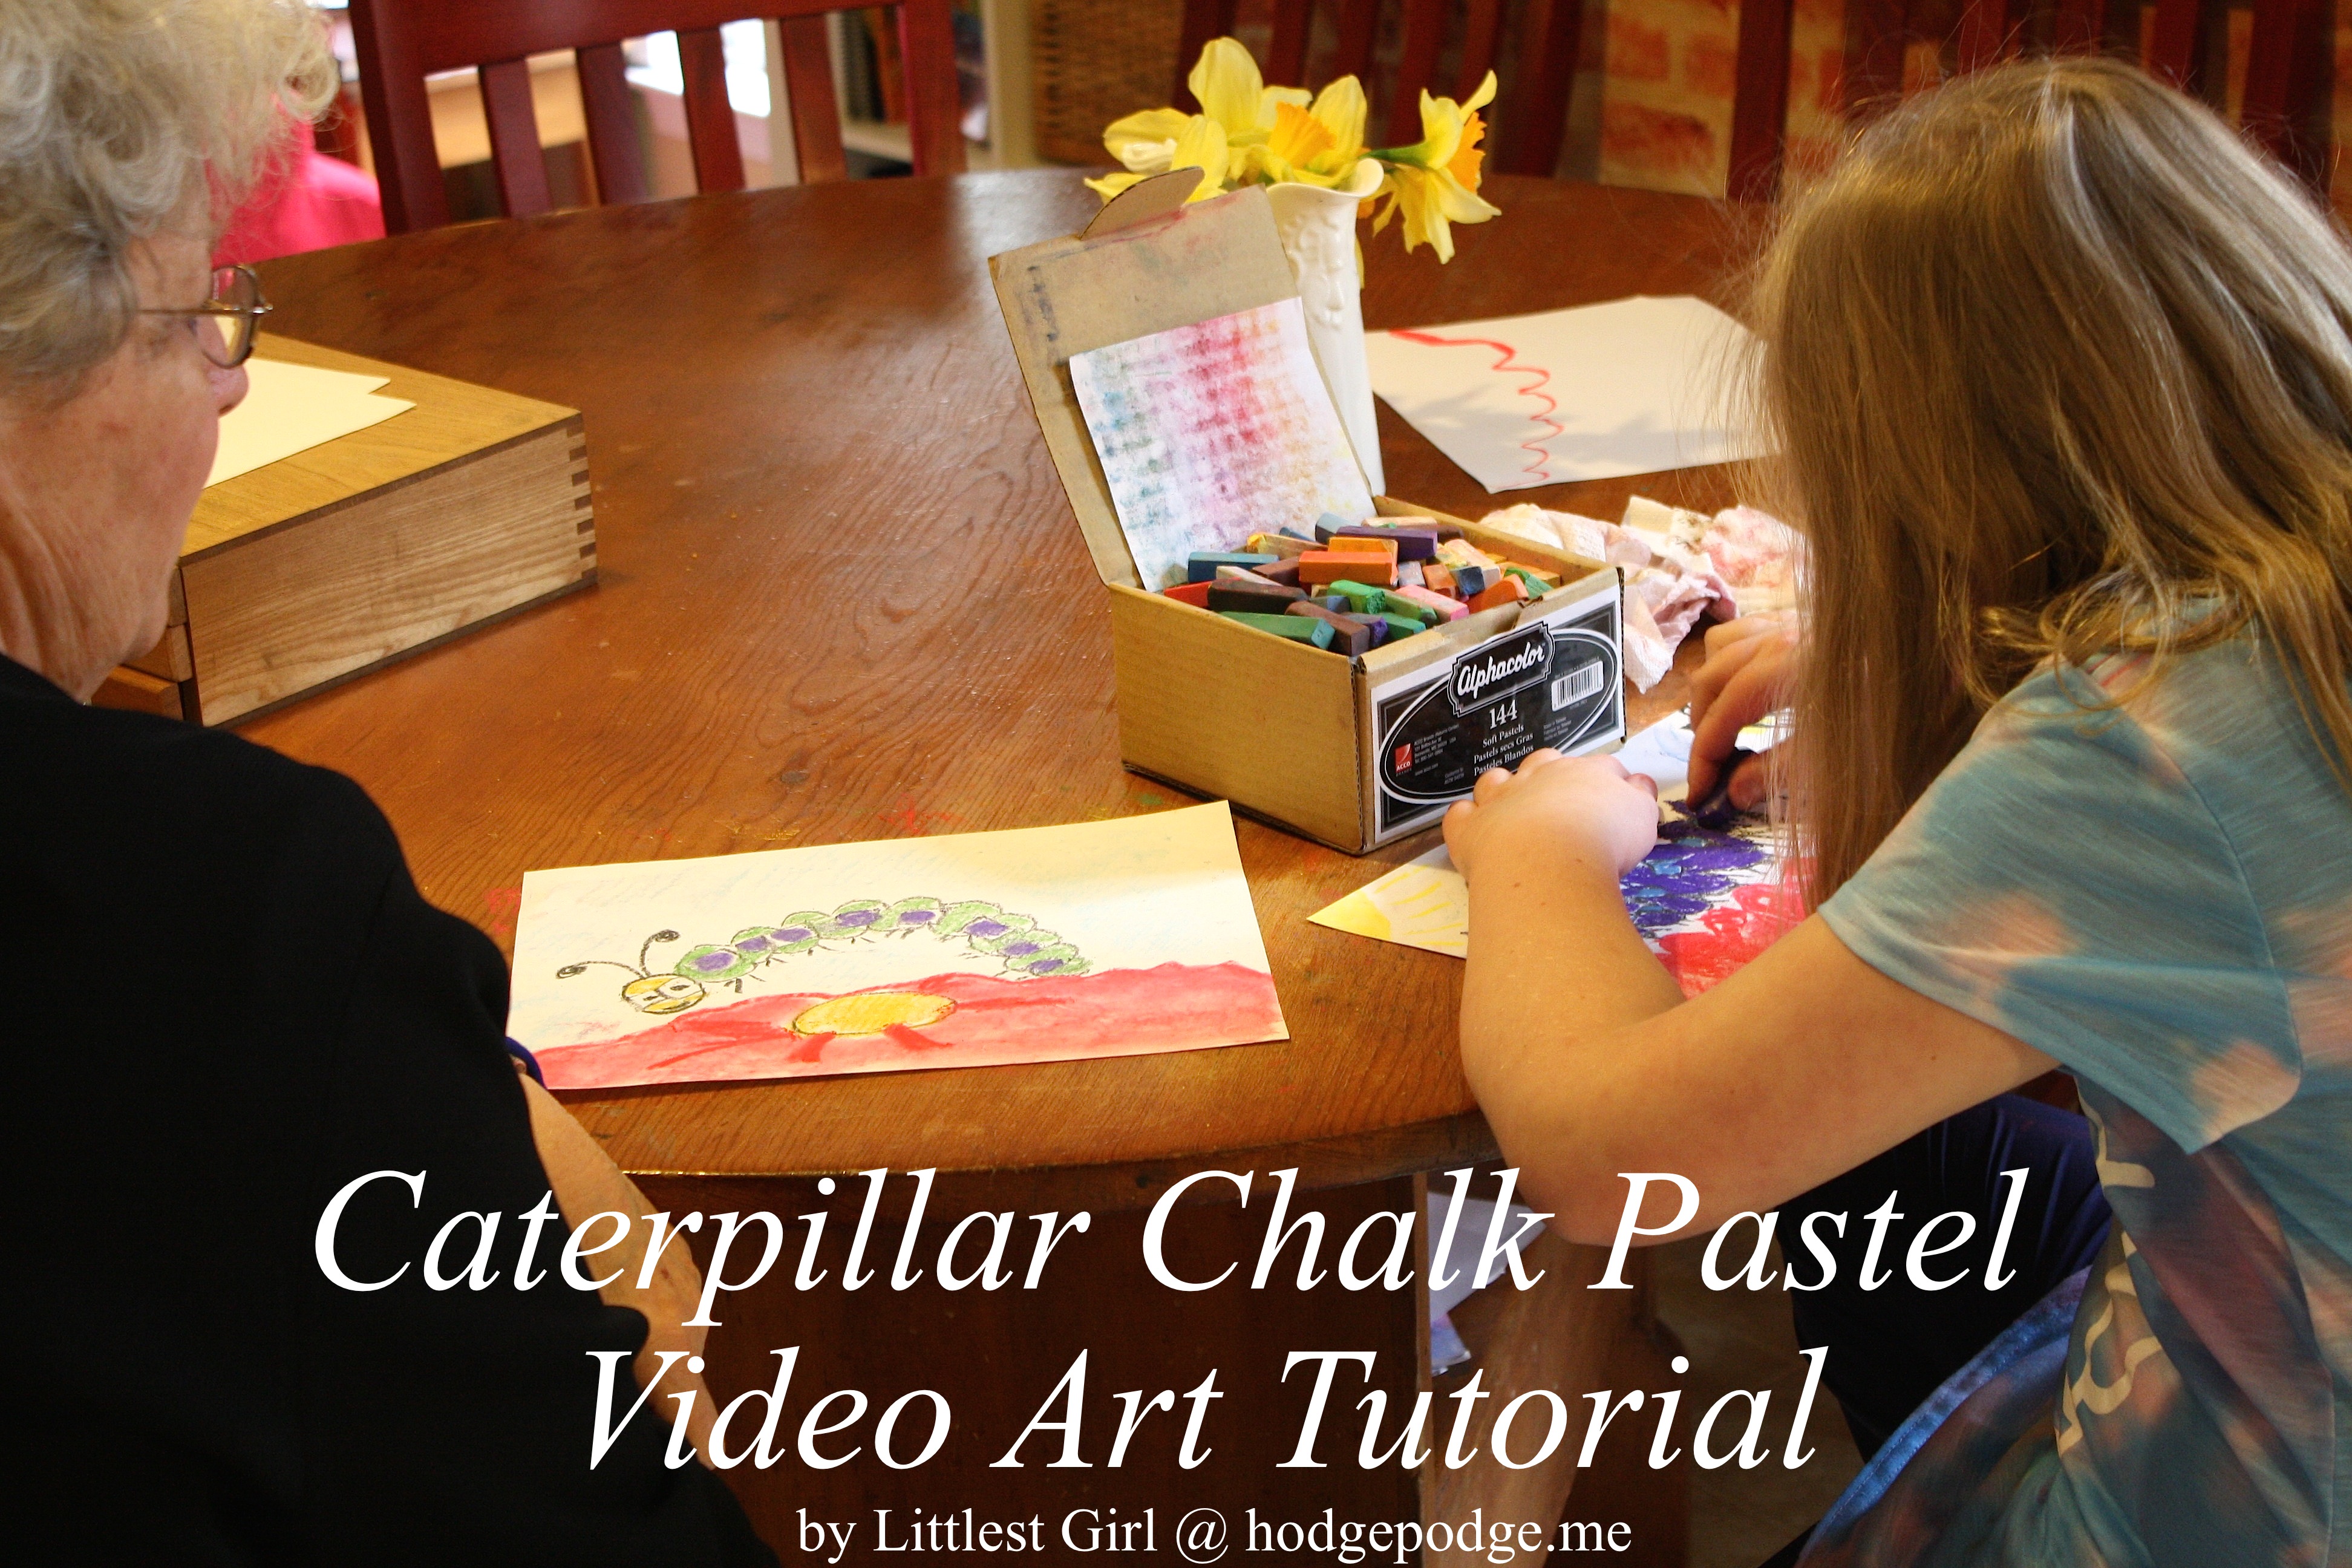 Caterpillar Chalk Art - Littlest Girl teaching Nana hodgepodge.me